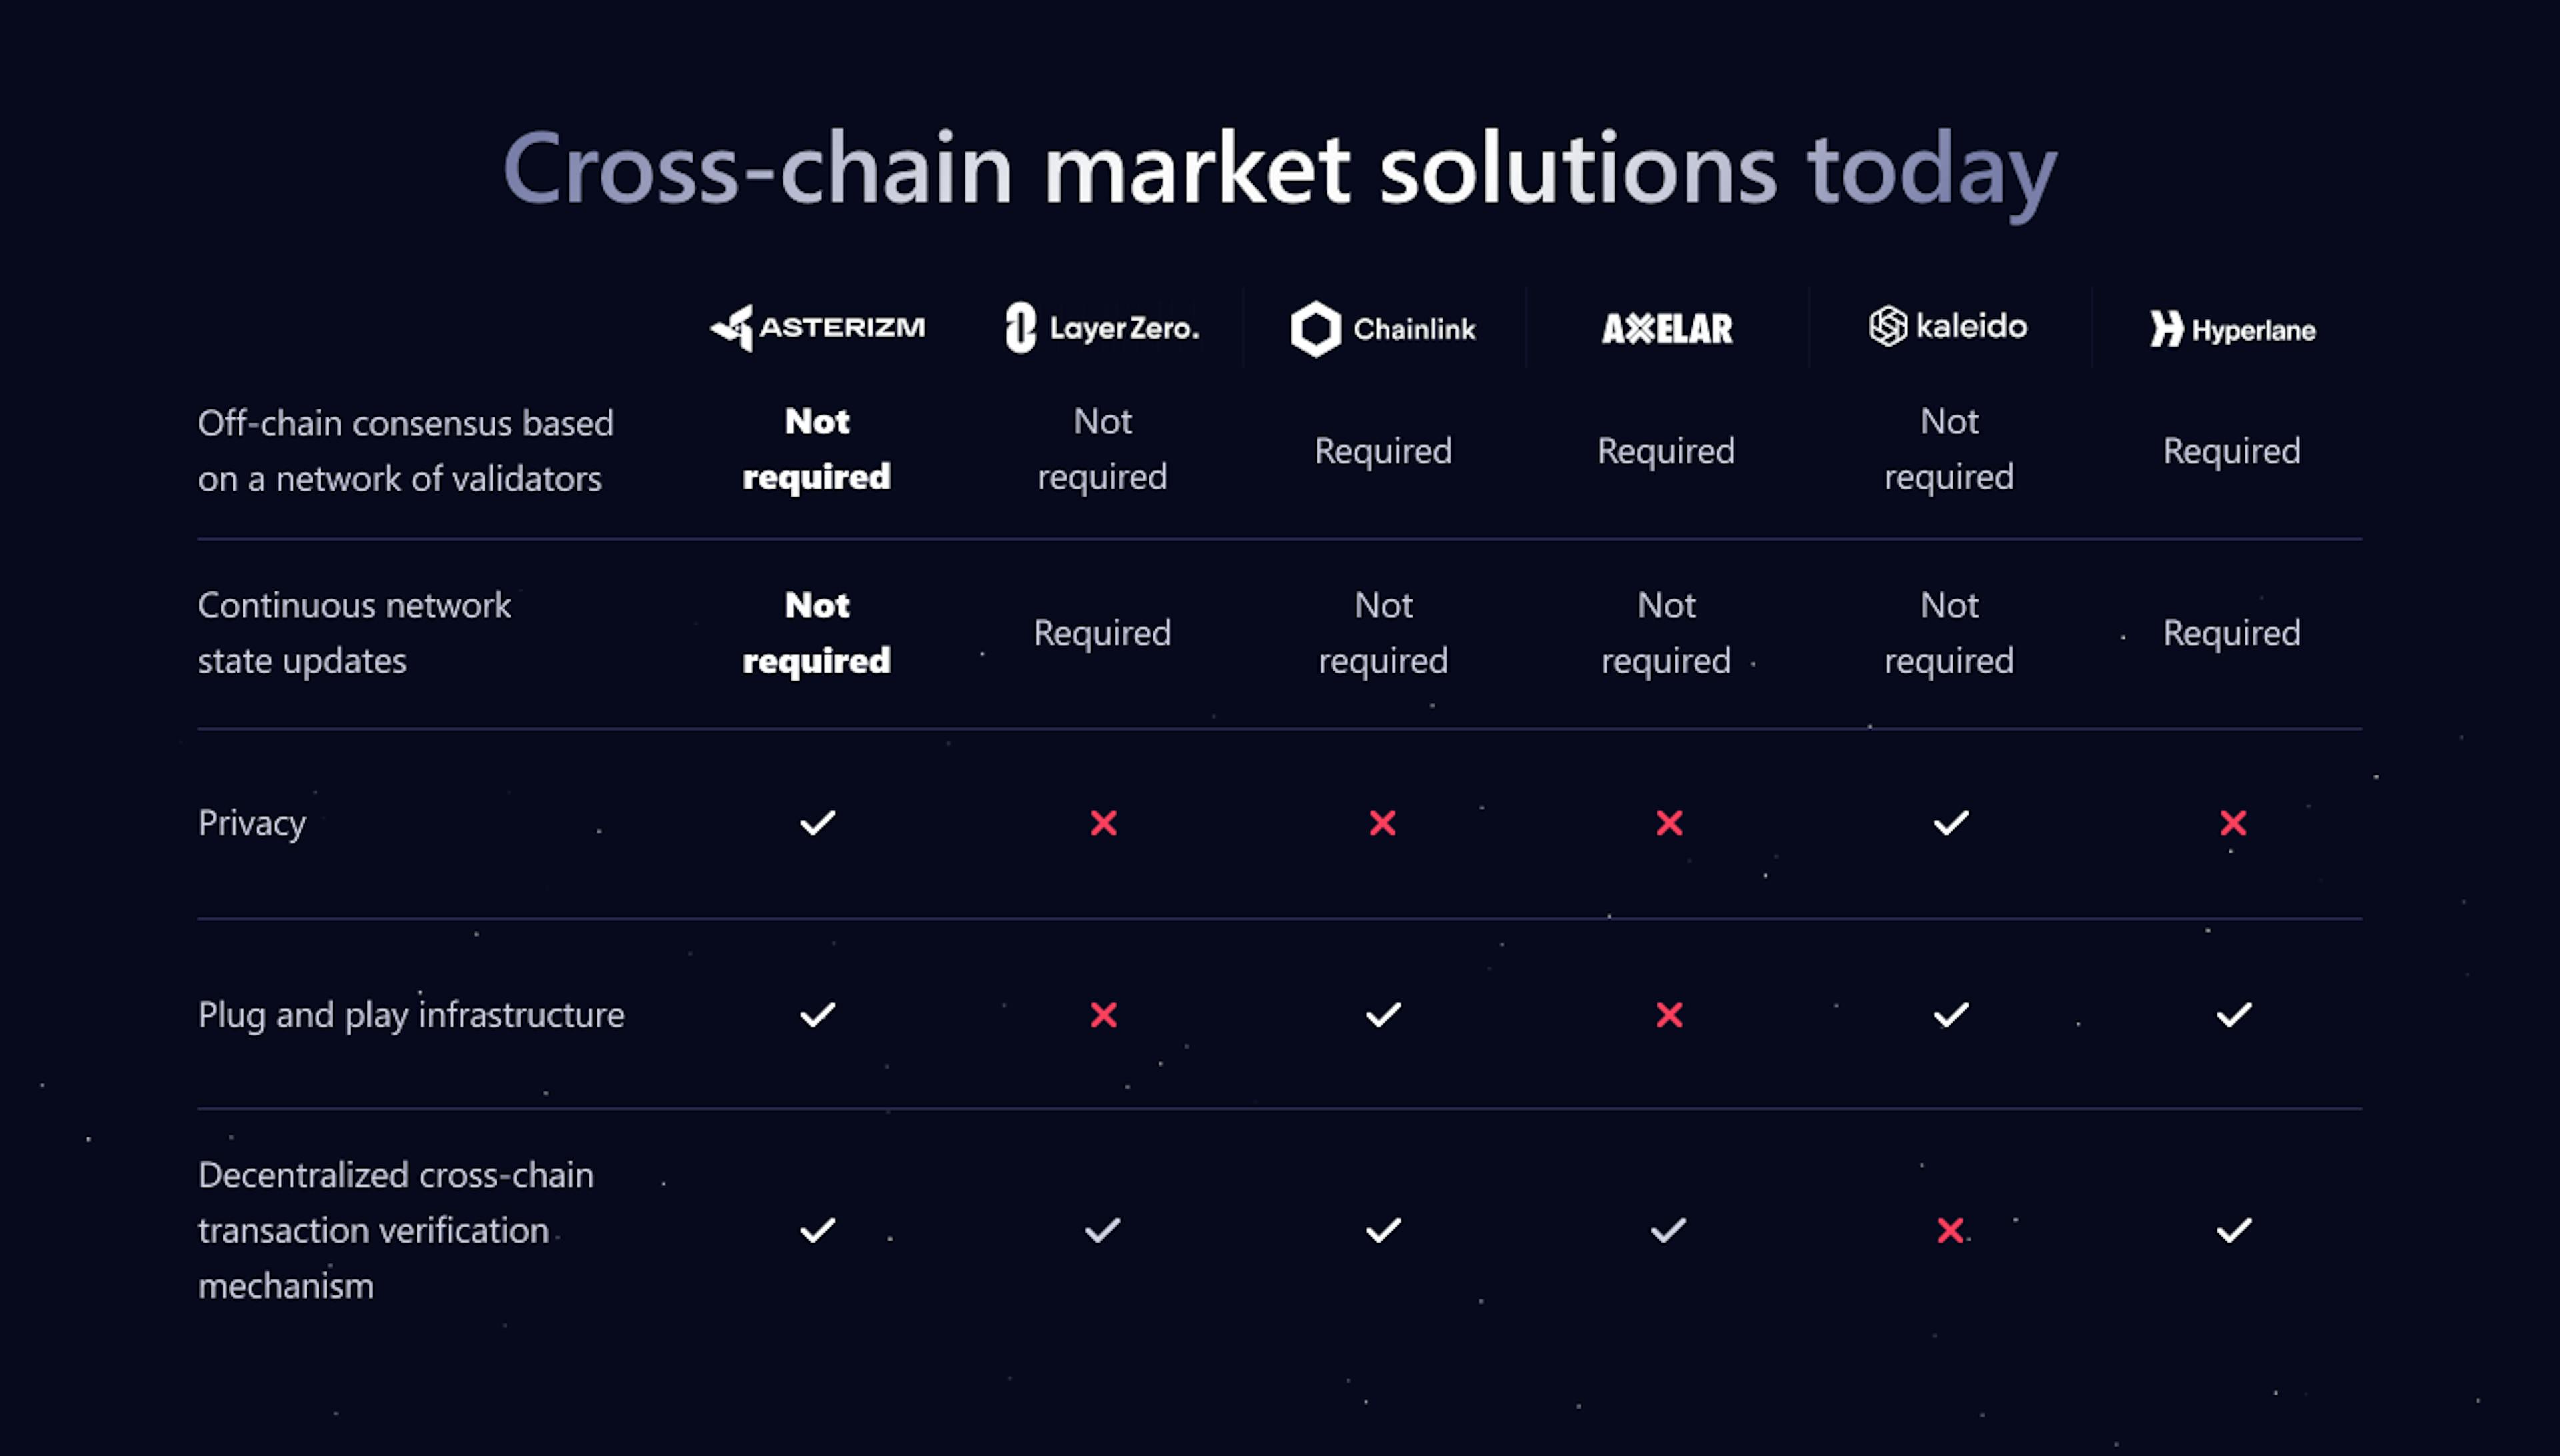 Comparison of cross-chain solutions